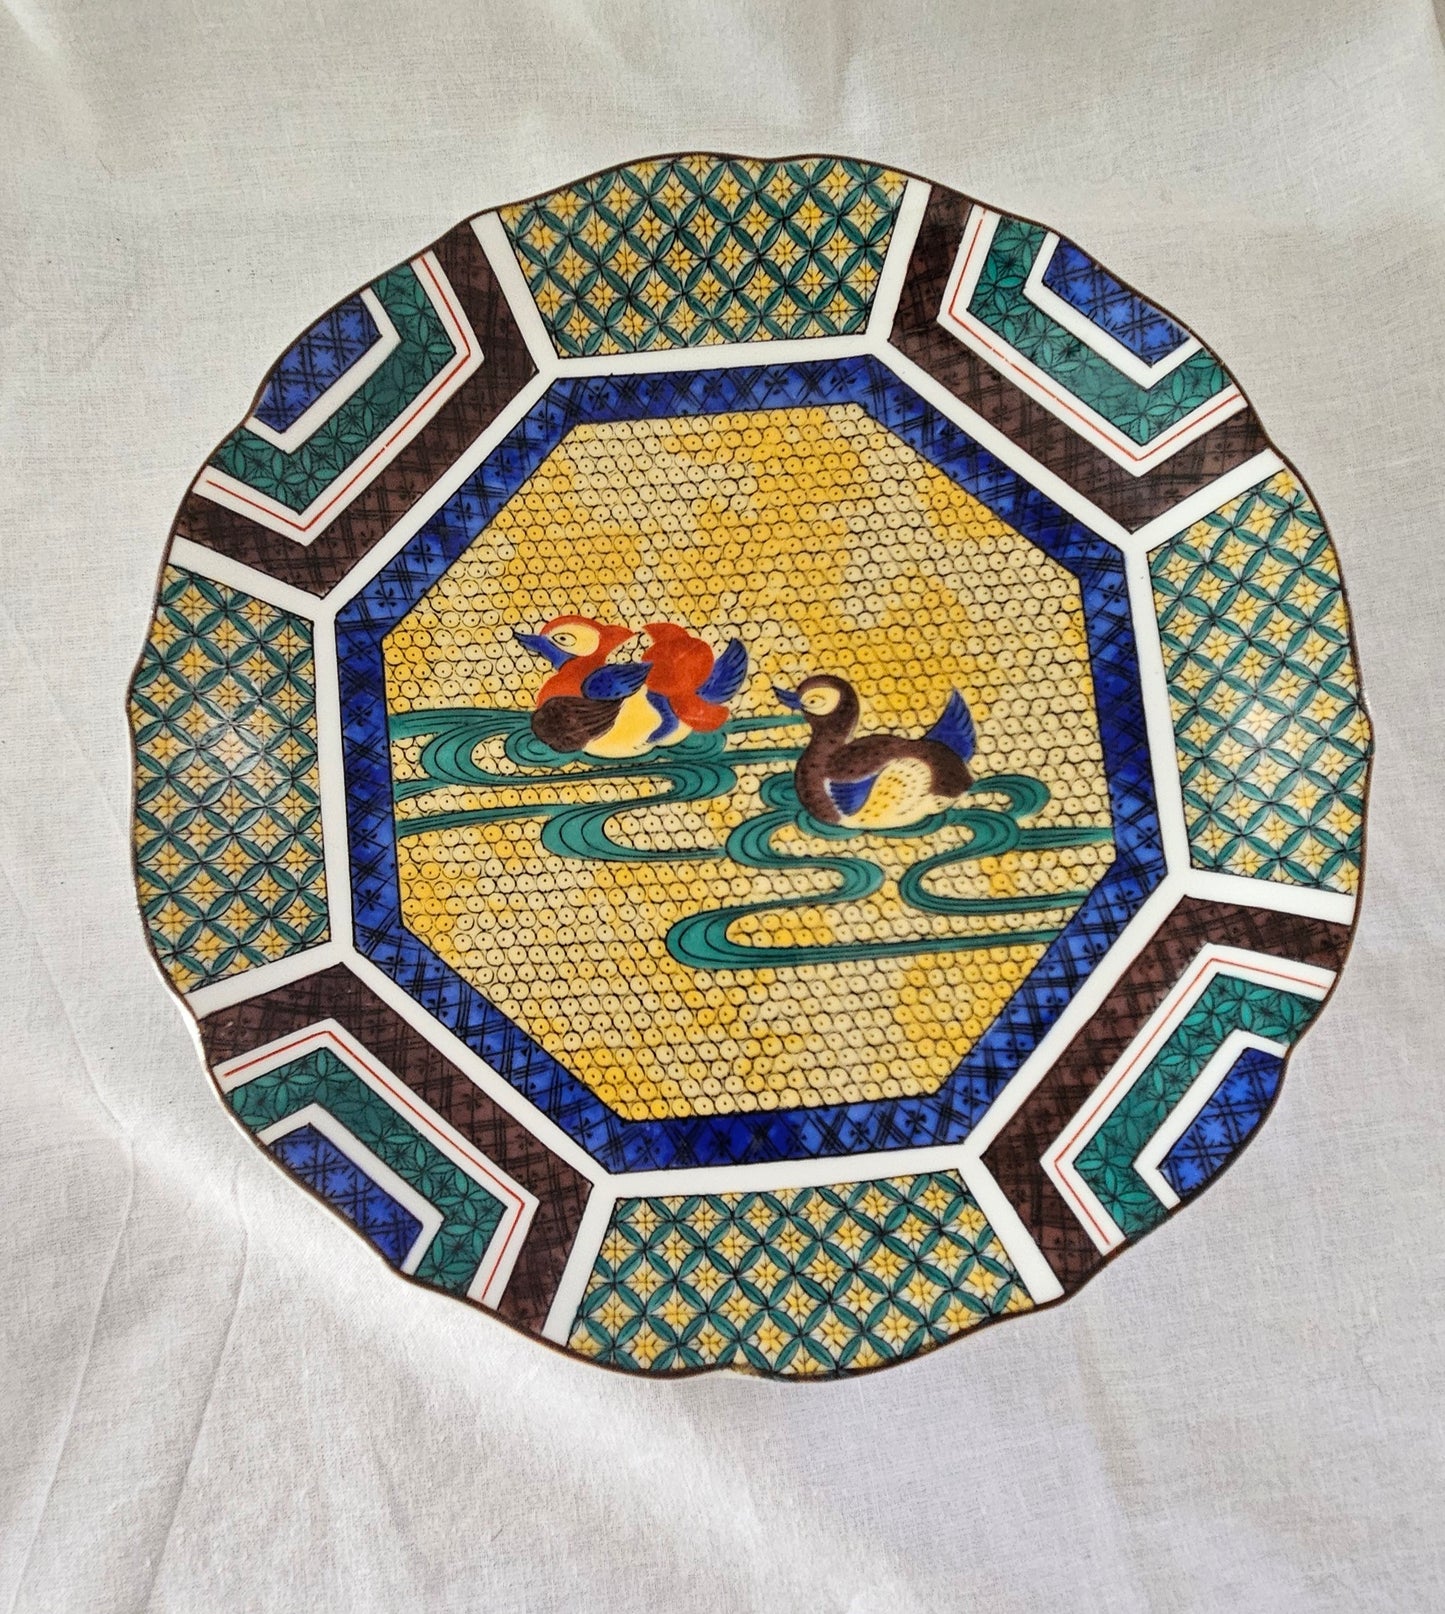 Sanyo Toki Japanese porcelain plate with geometric designs and two mandarin ducks.